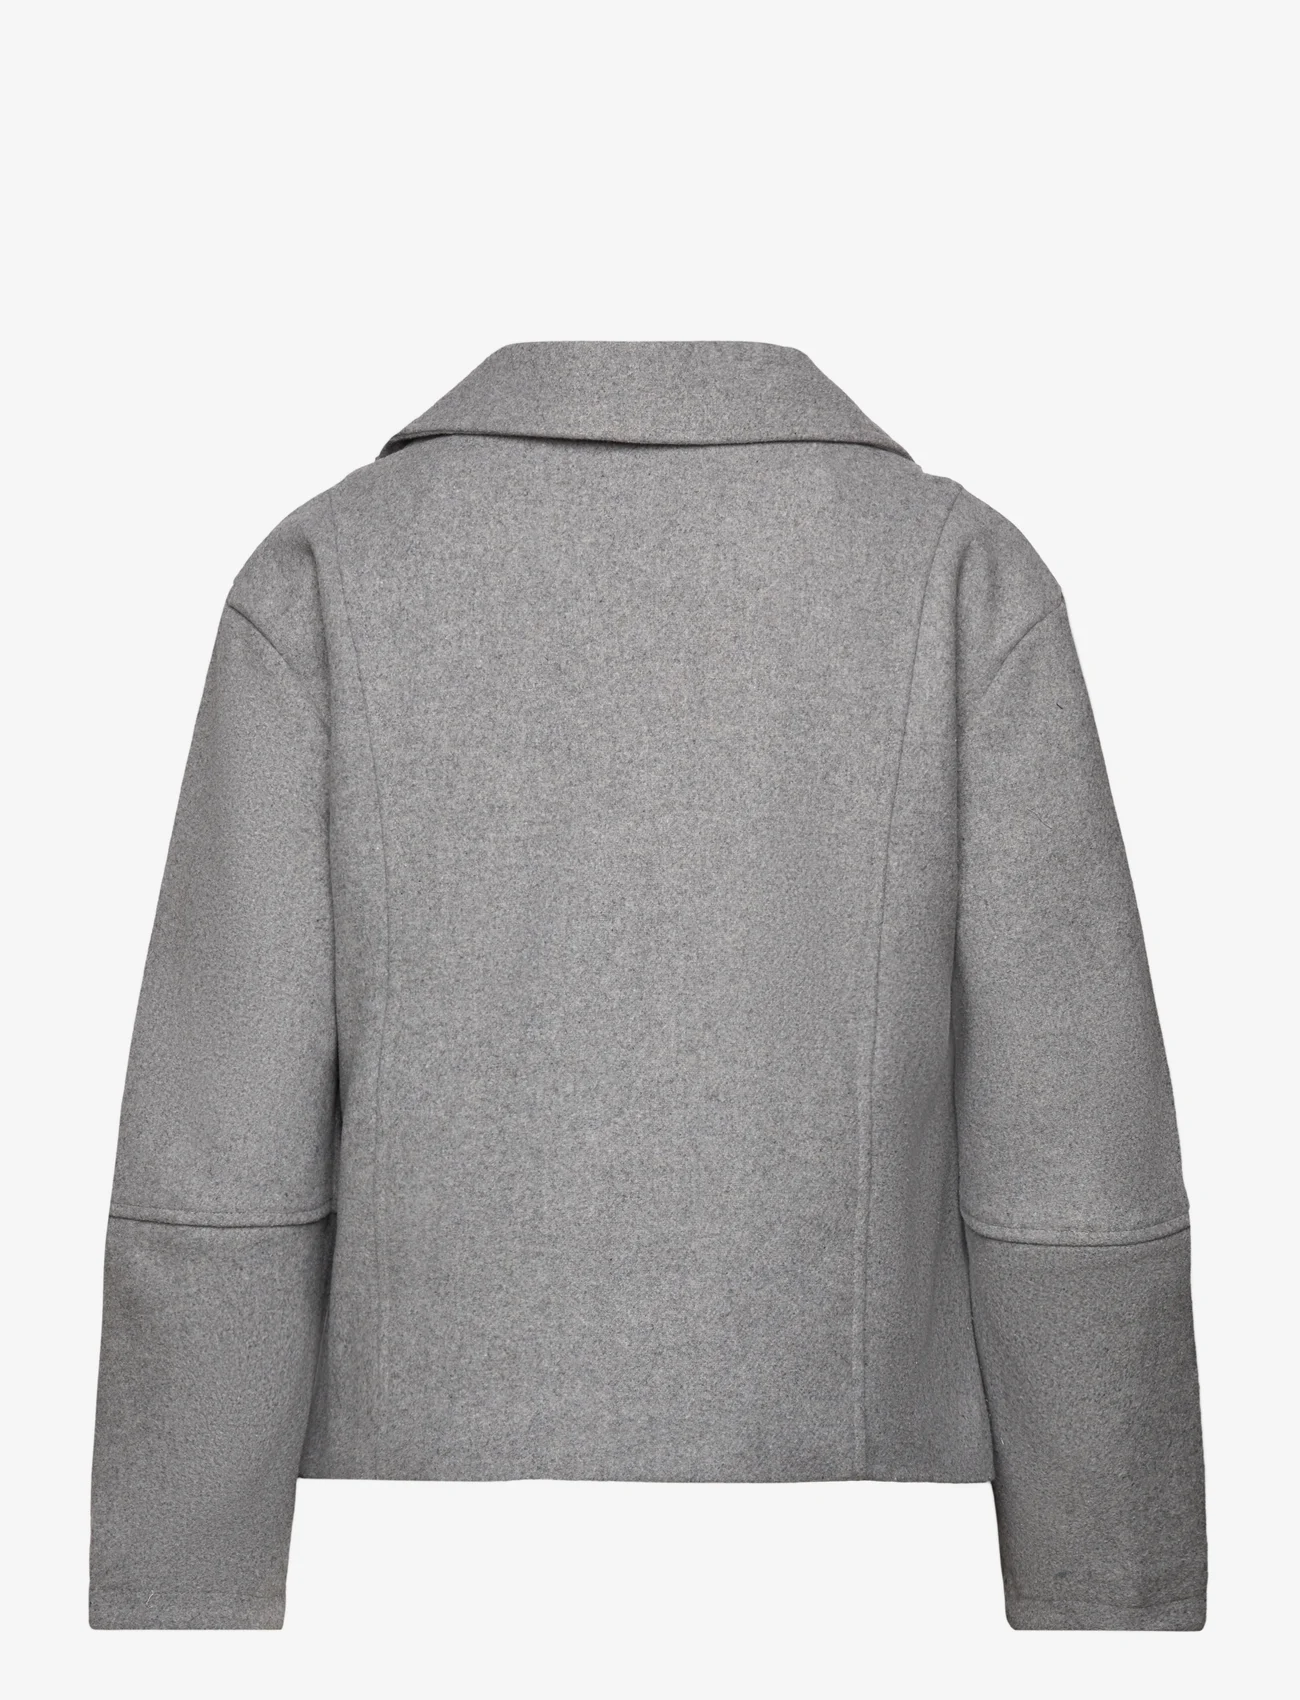 Rosemunde - Wool jacket - winterjassen - light grey melange - 1